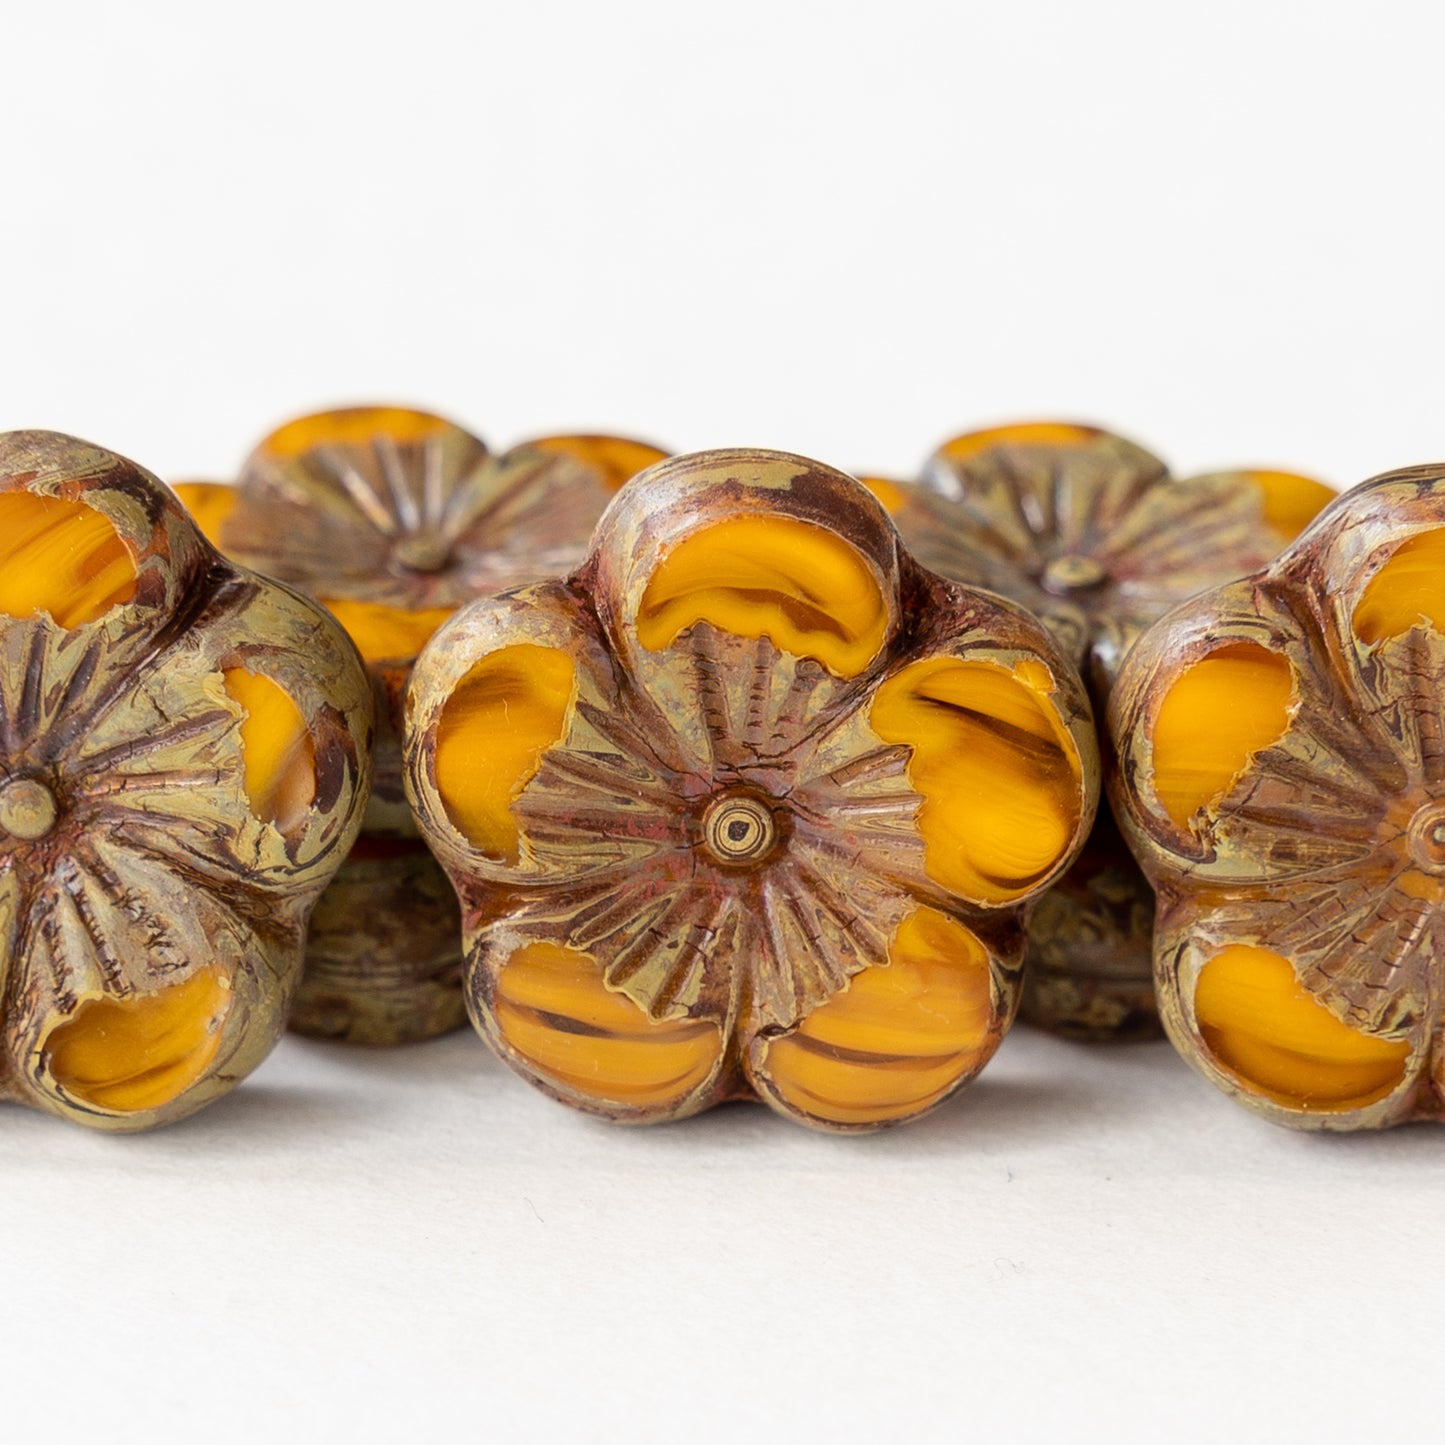 21mm Flower Beads - Mixed Ochre Orange - 2 or 6 beads